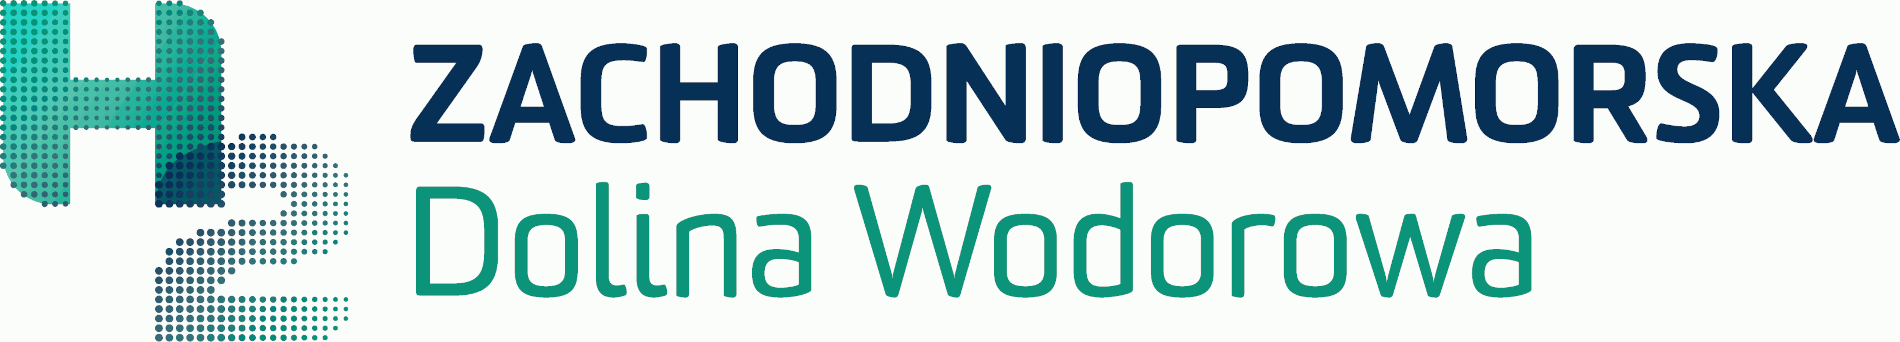 Zachodniopomorska Dolina Wodorowa logo